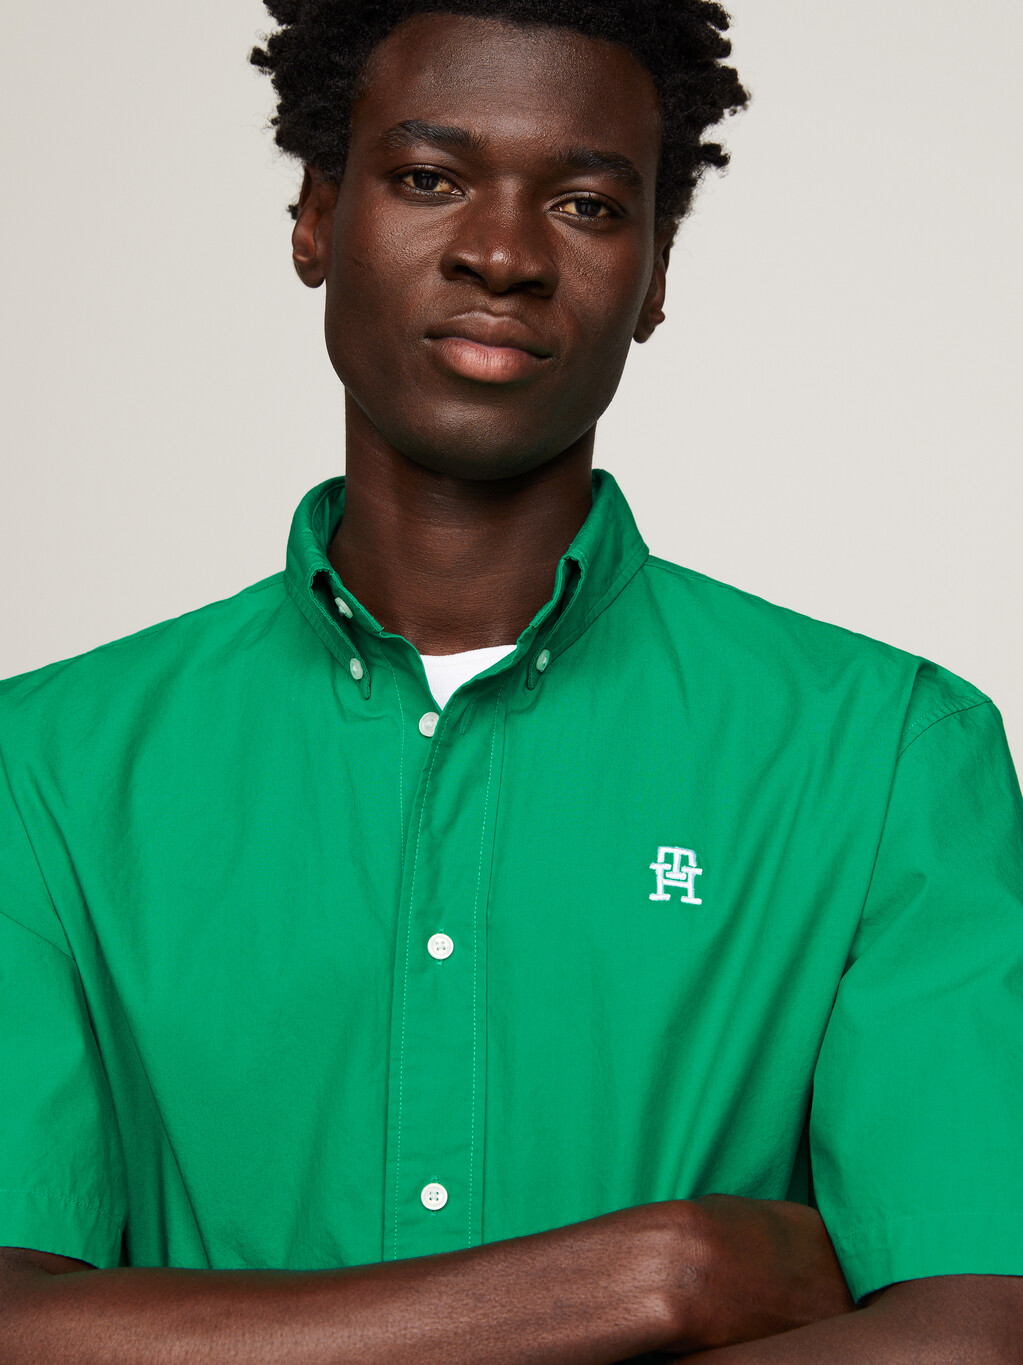 TH Monogram 常規短袖襯衫, Olympic Green, hi-res